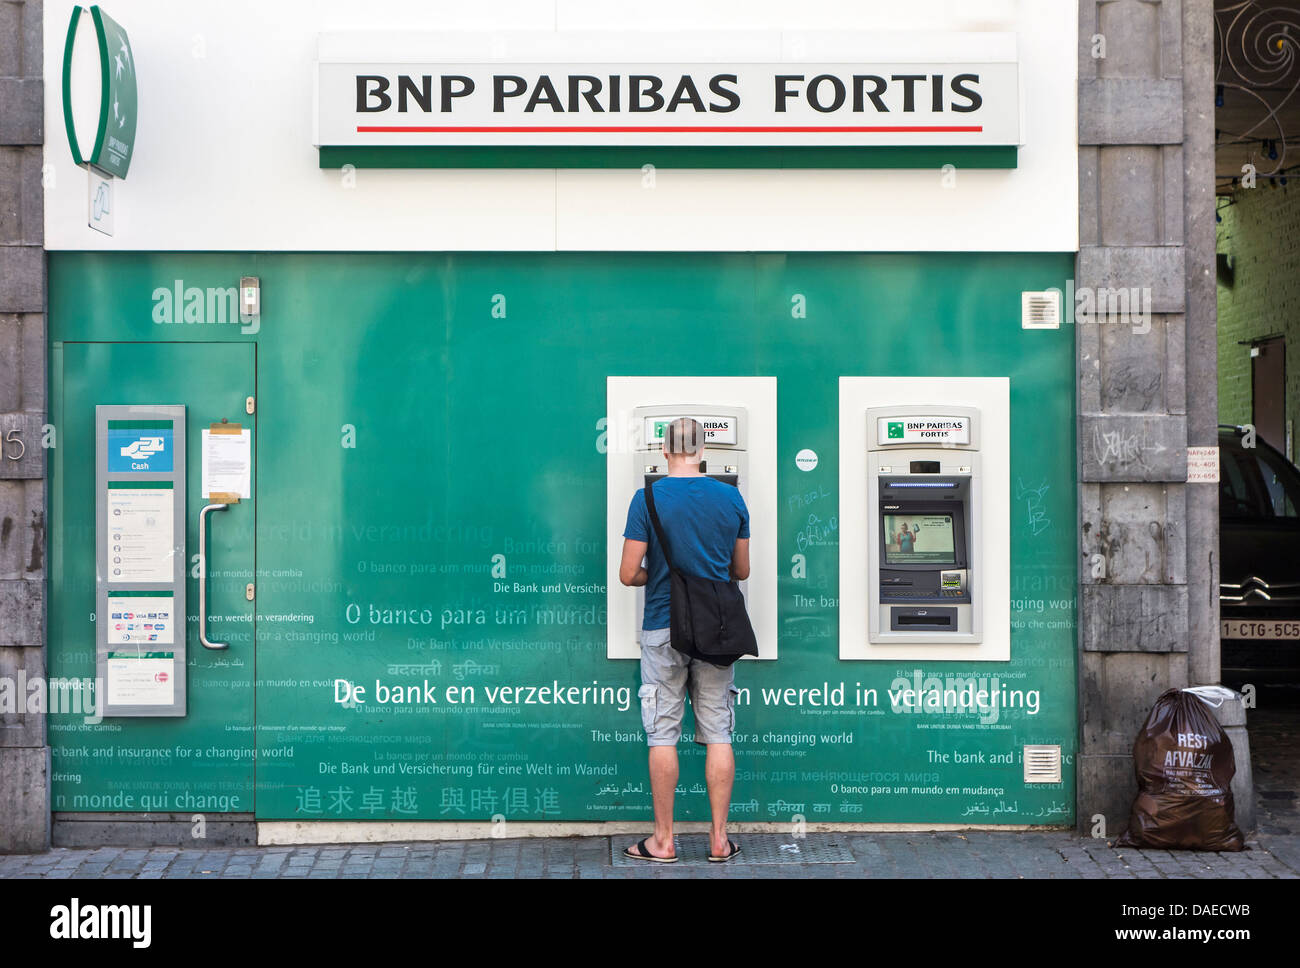 Man collecting money at cash dispenser of the BNP Paribas Fortis bank, Belgium Stock Photo